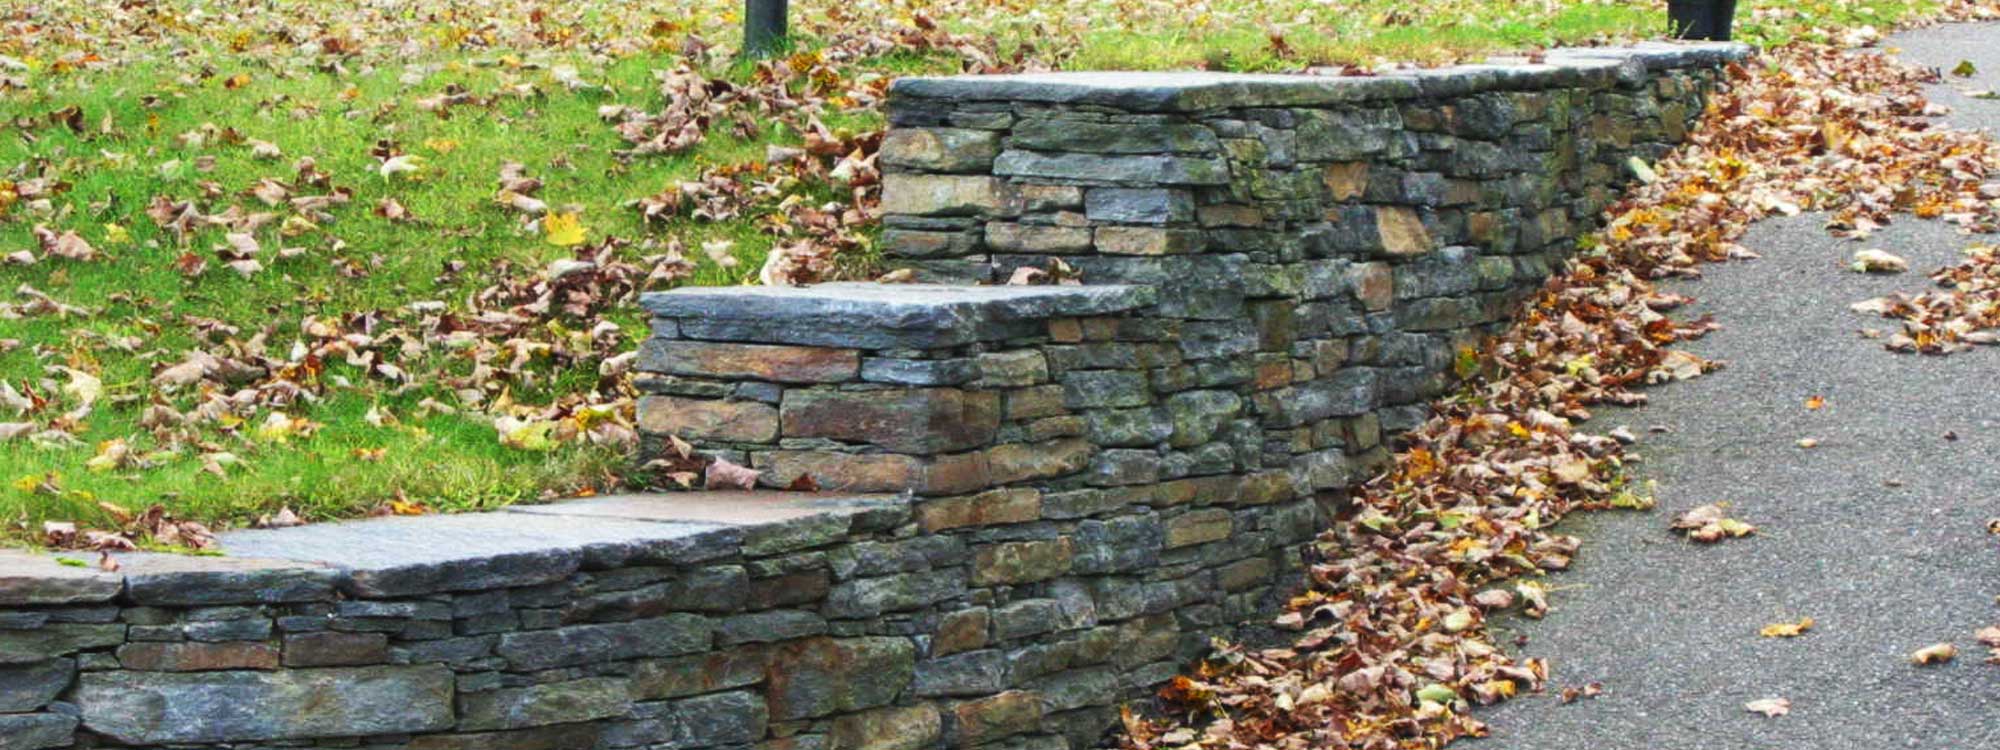 Annapolis Neck Retaining Wall and Garden Wall Construction